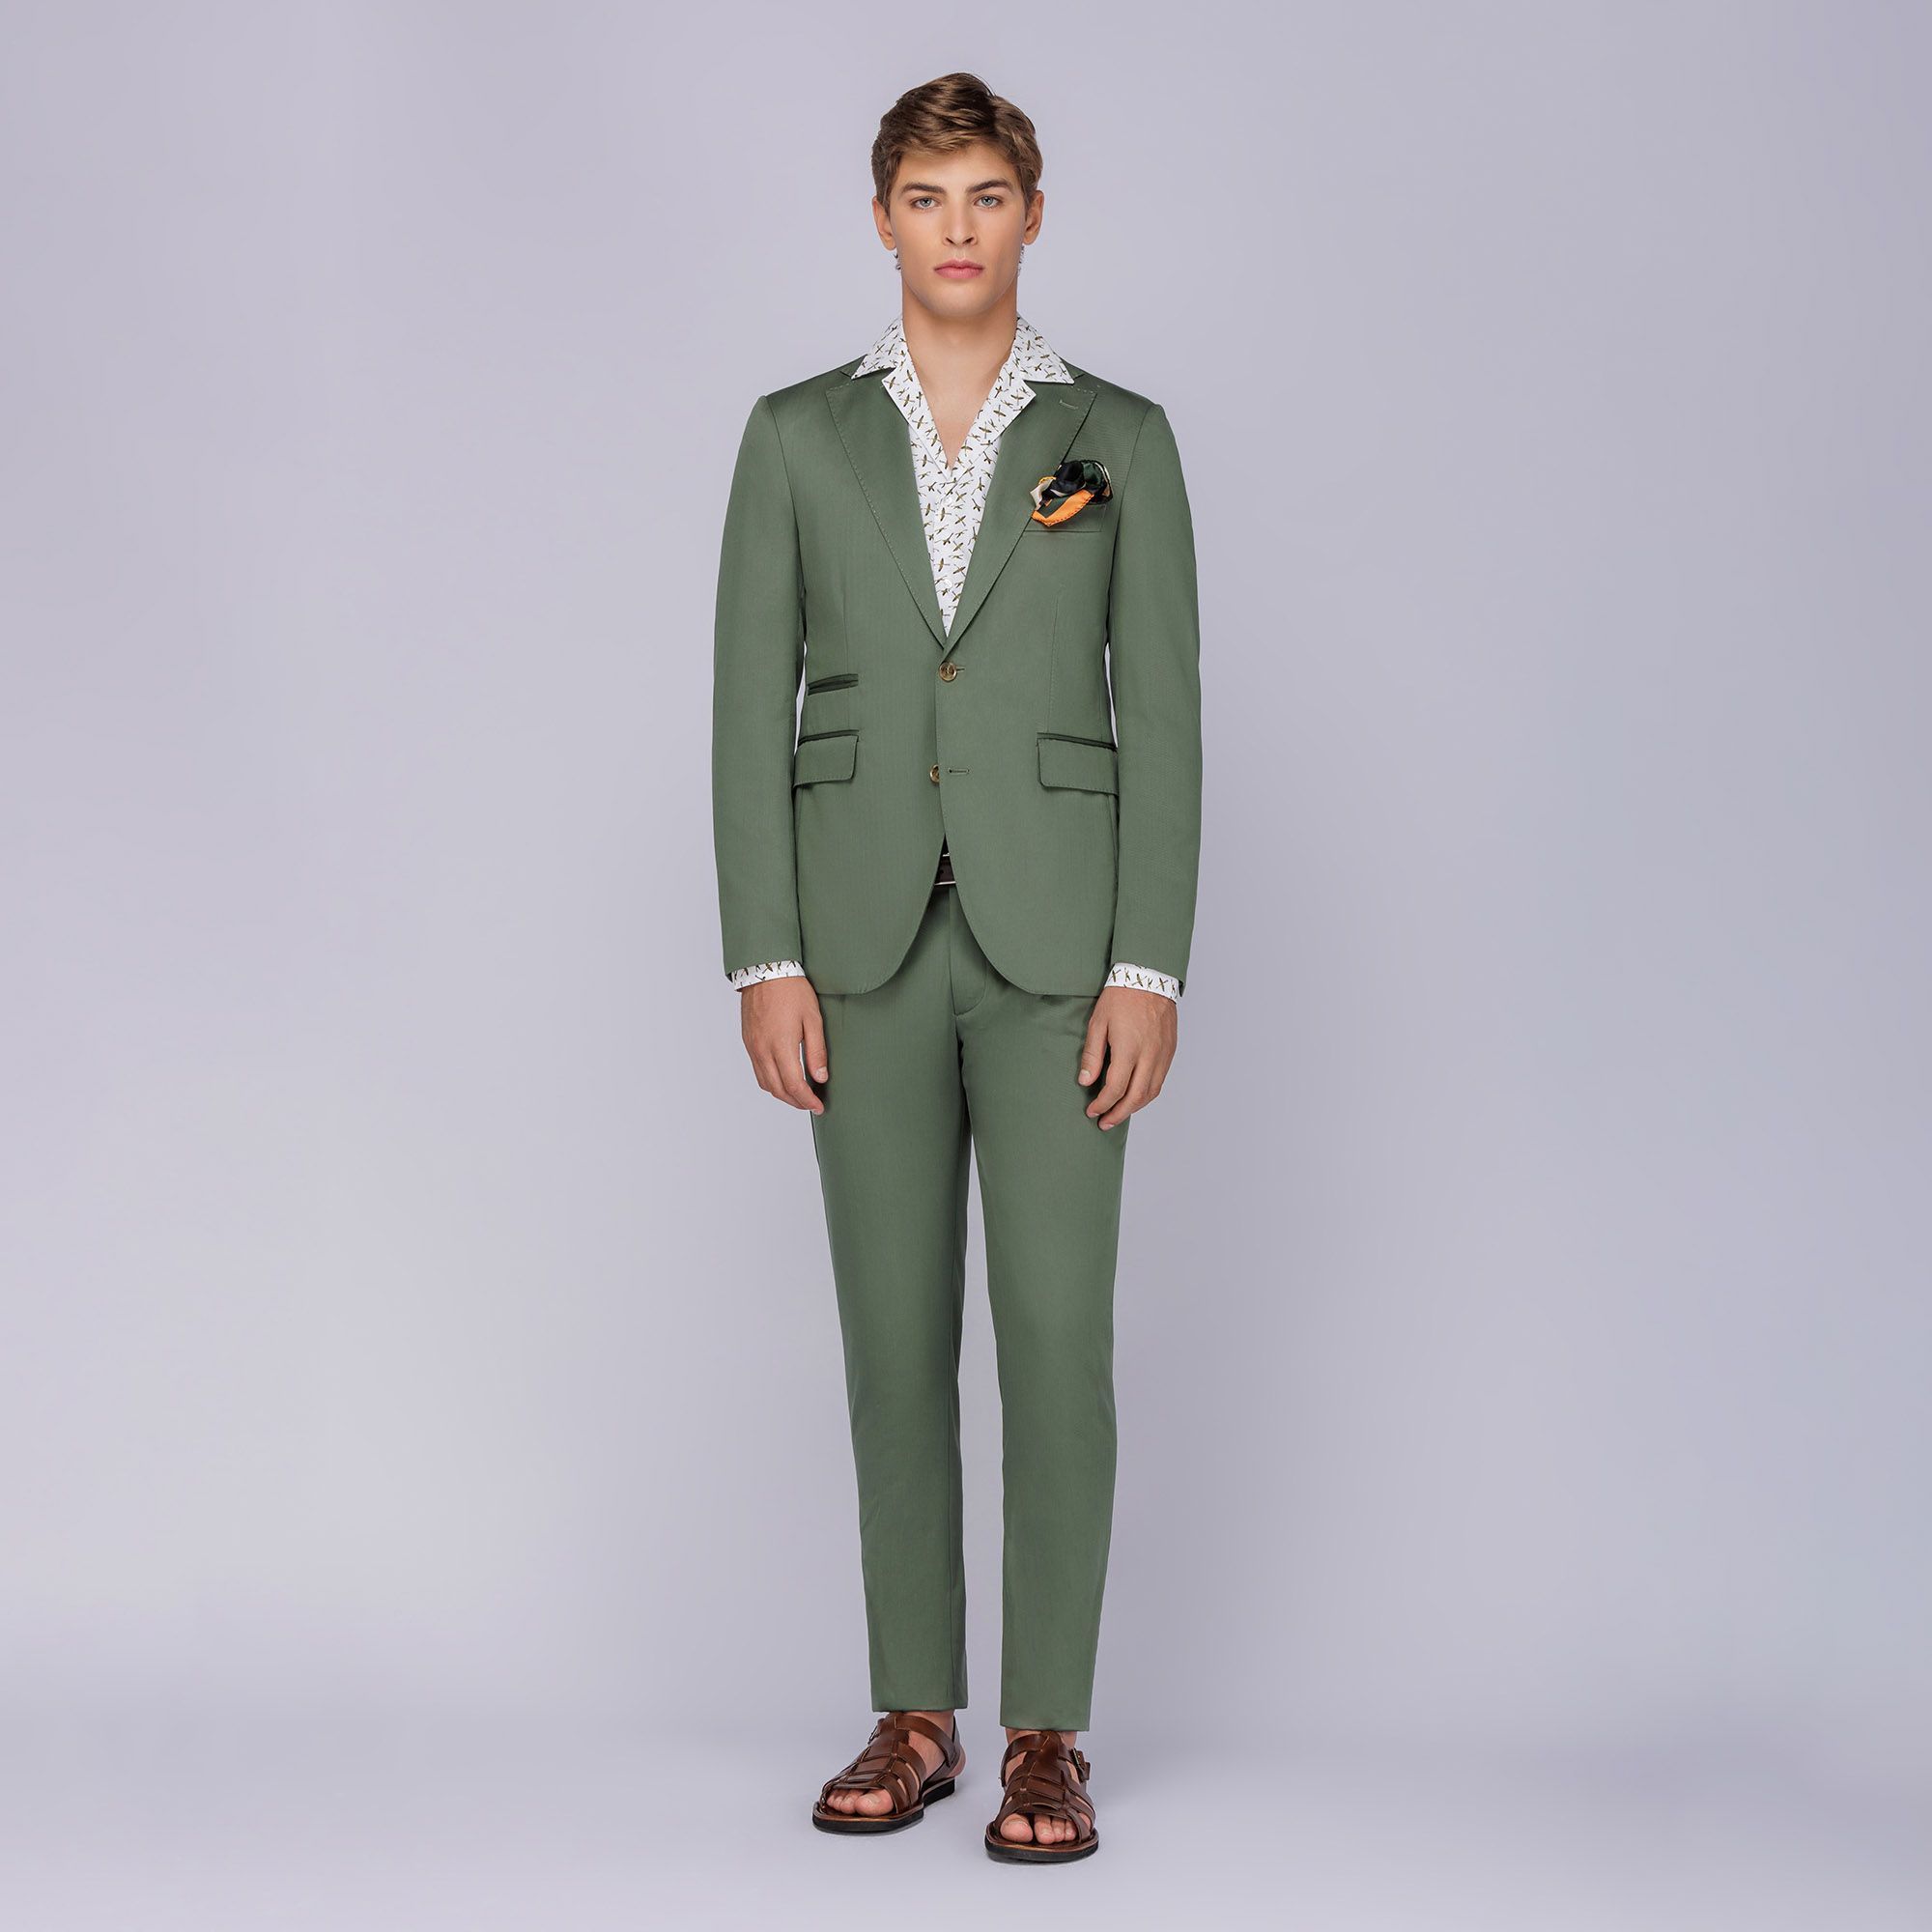 Men's Olive Green Suit